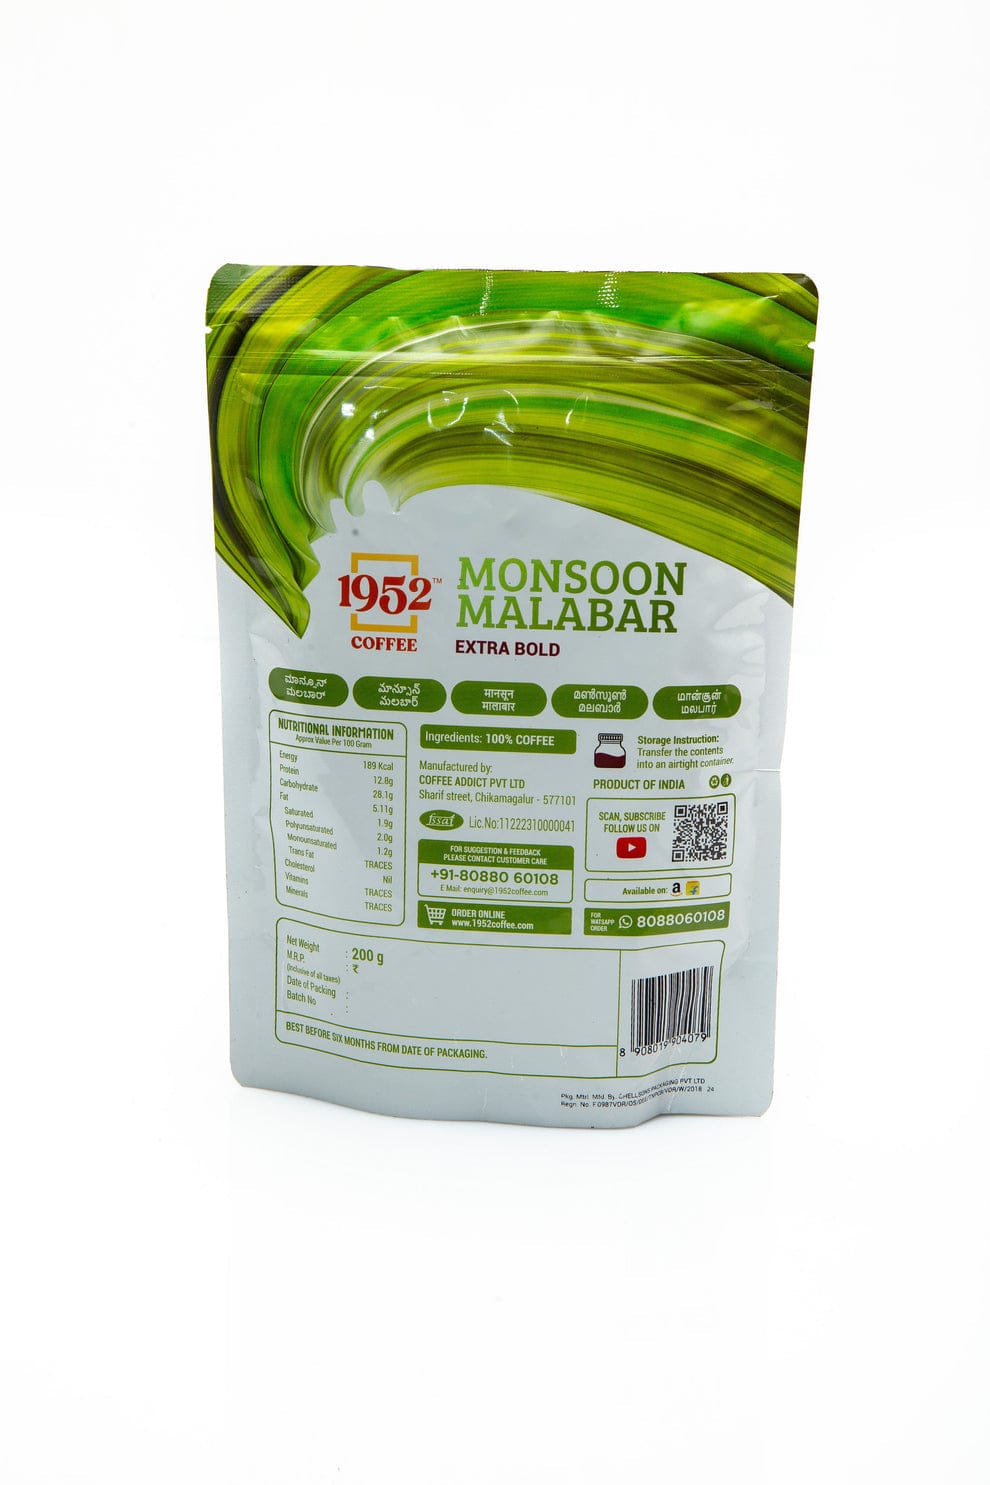 Monsoon Malabar Filter Coffee 200g×2 (100% Pure Coffee )